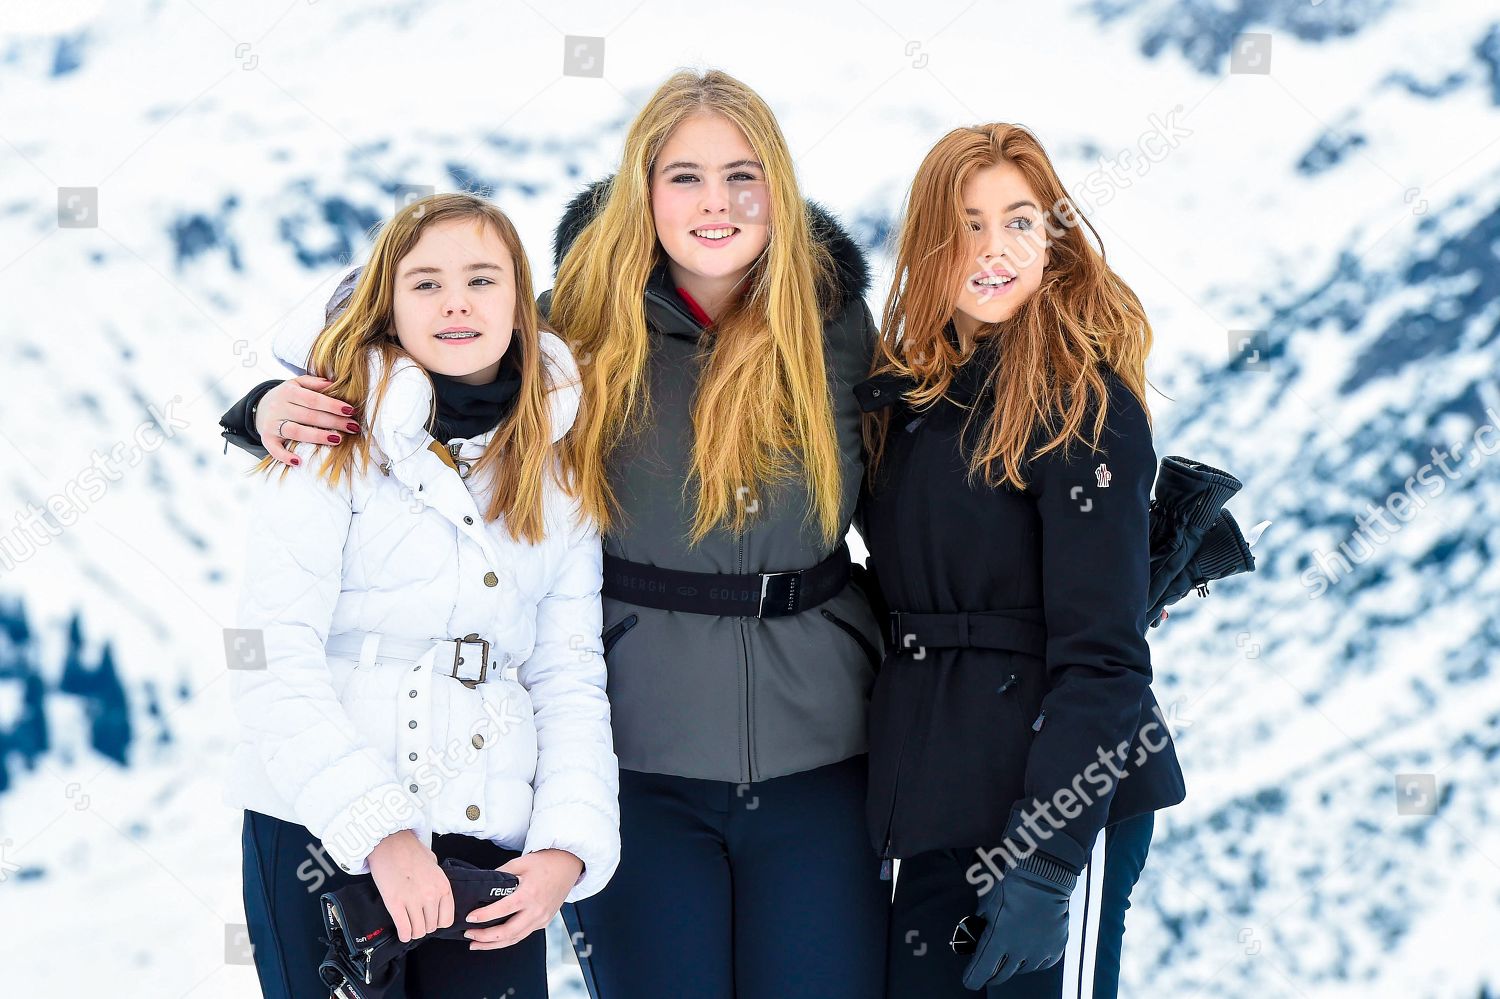 dutch-royal-family-winter-holiday-photocall-lech-austria-shutterstock-editorial-10566567j.jpg